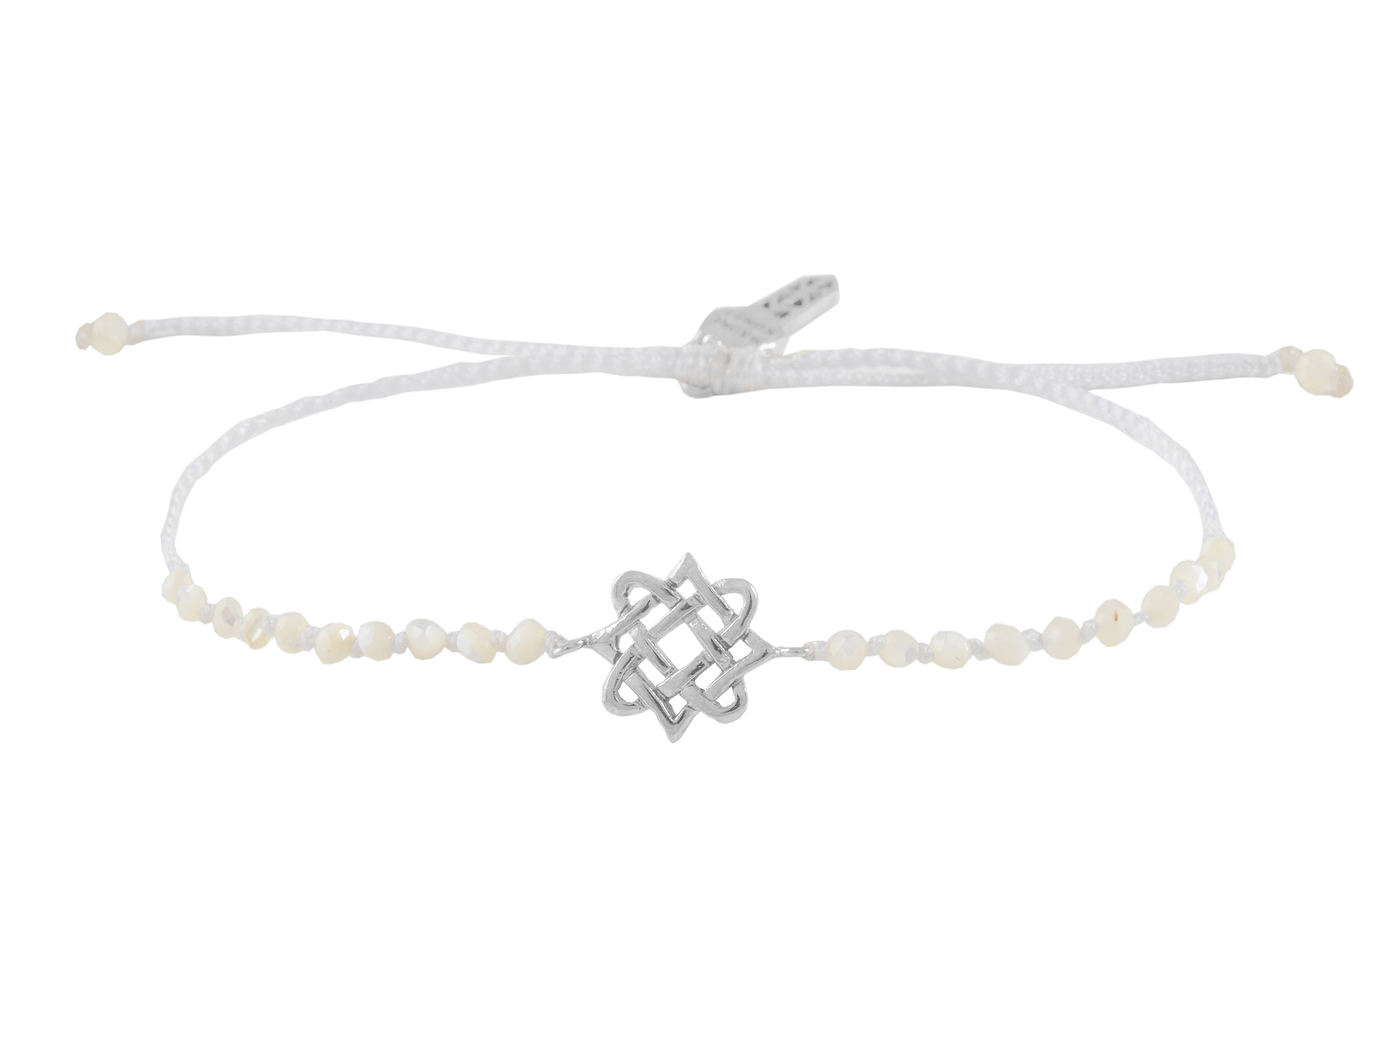 Lada star talisman mini bracelet with beads. Silver